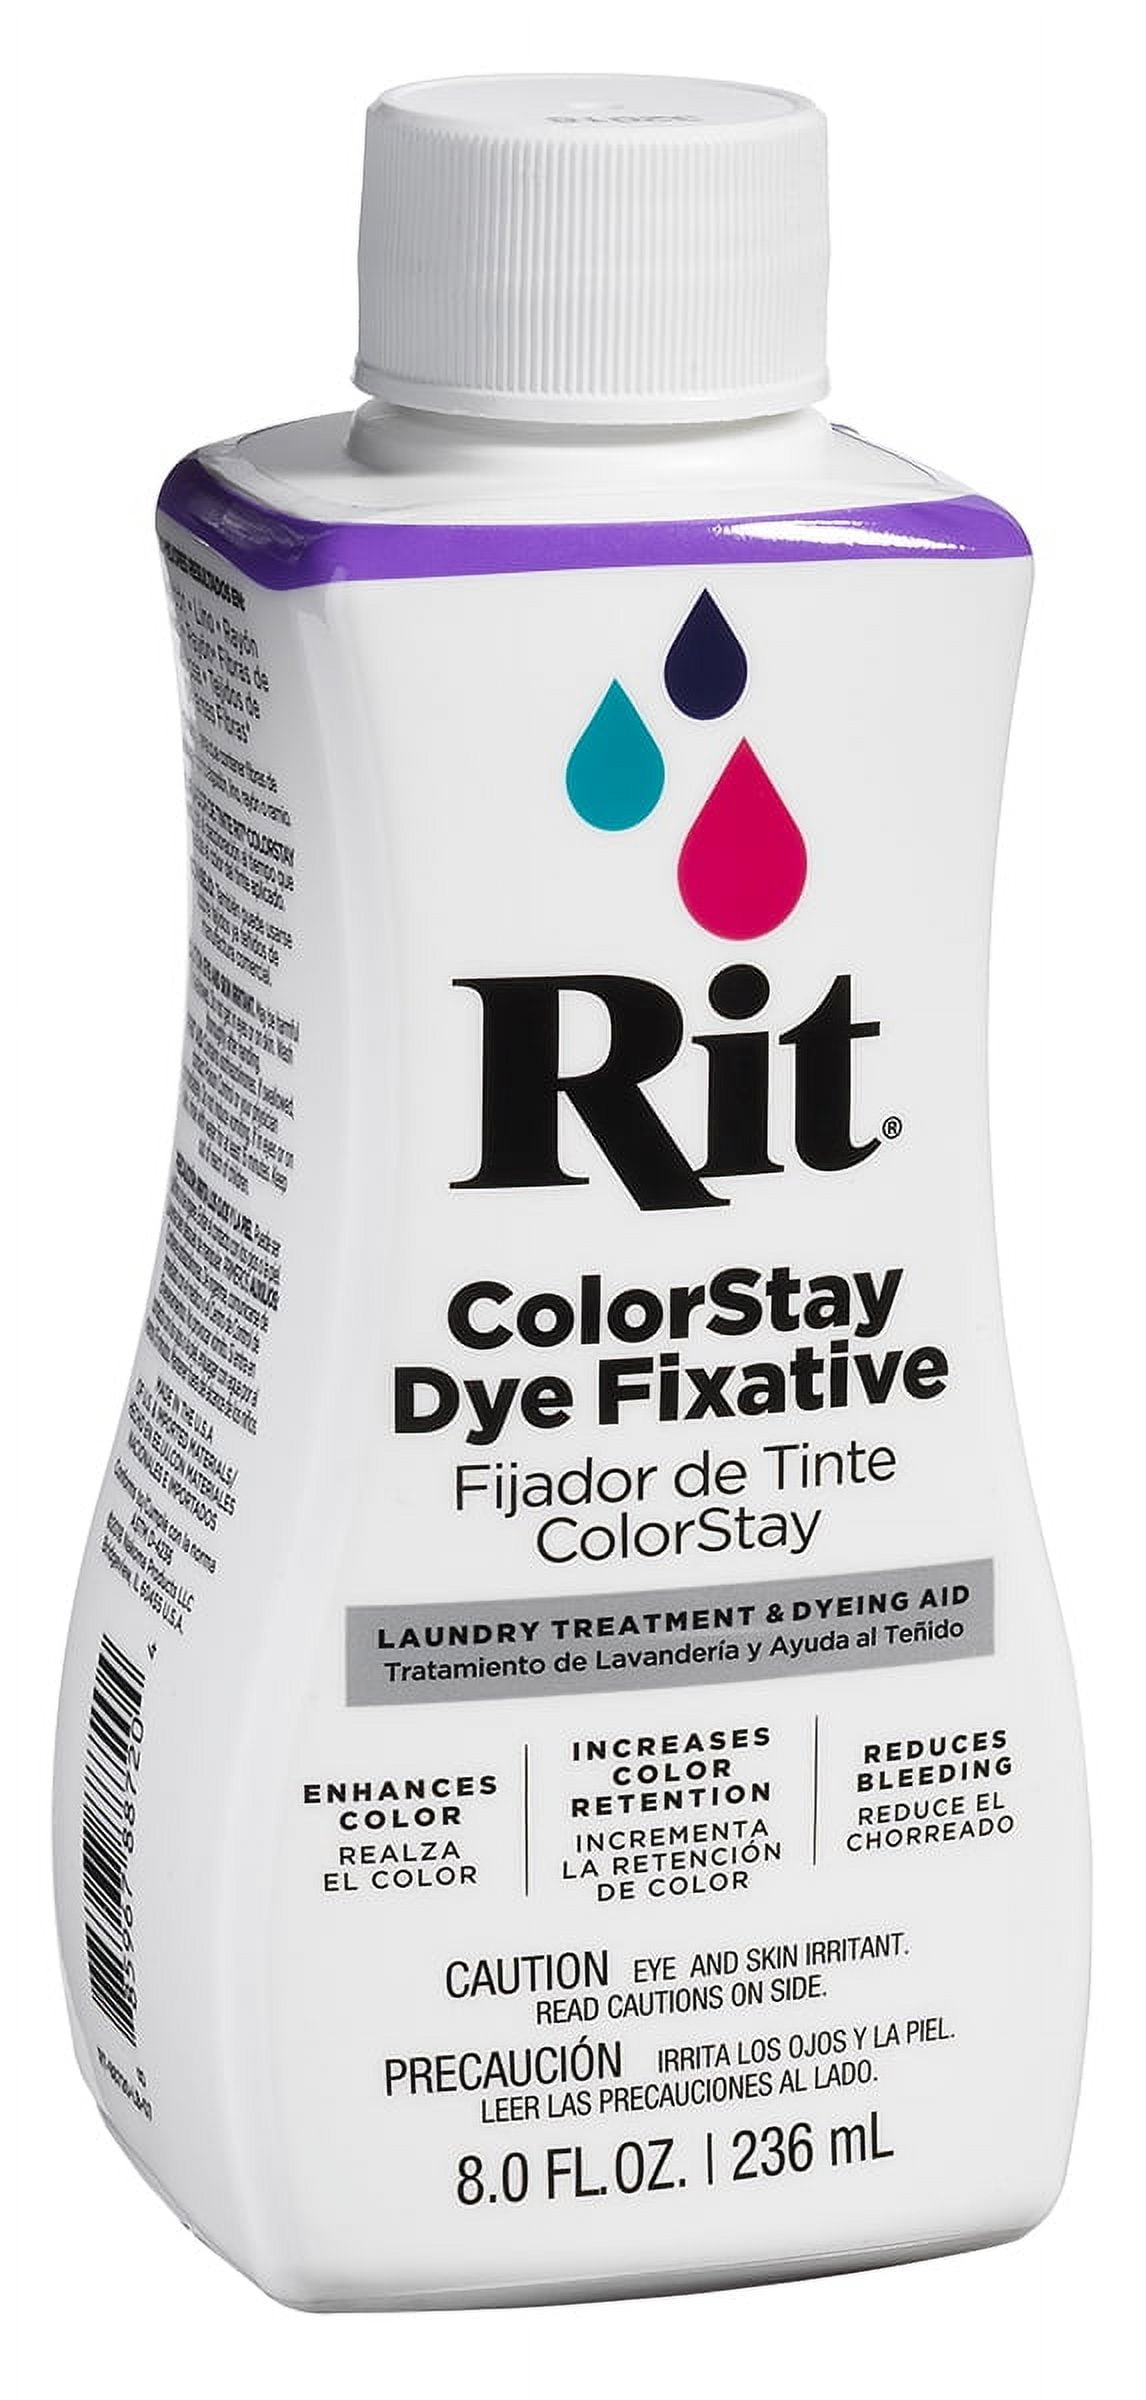 Rit - Color Stay Fixative – Panda Int'l Trading of NY, Inc